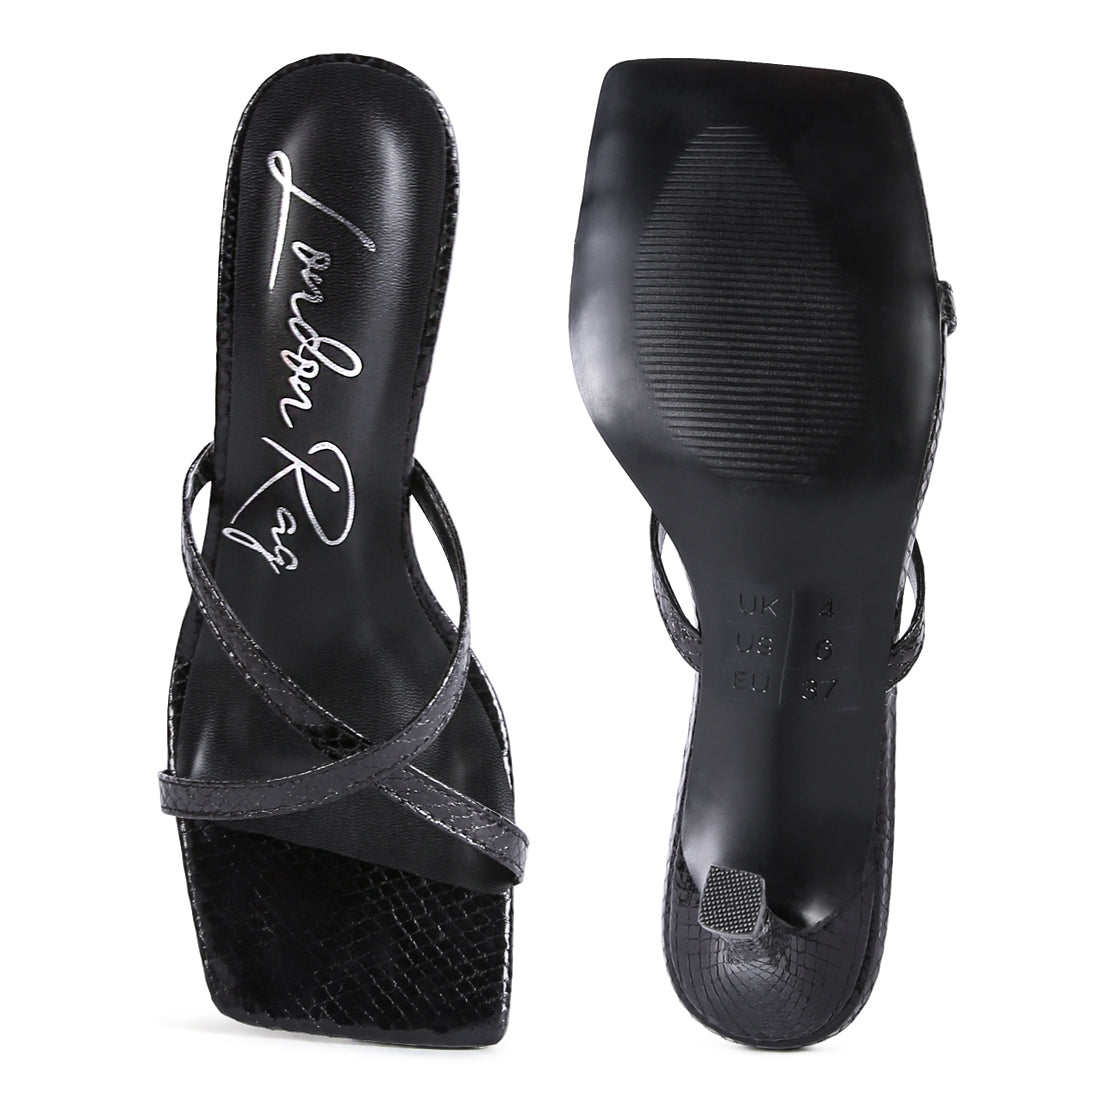 Croc Cross Strap Slider Sandals in Black